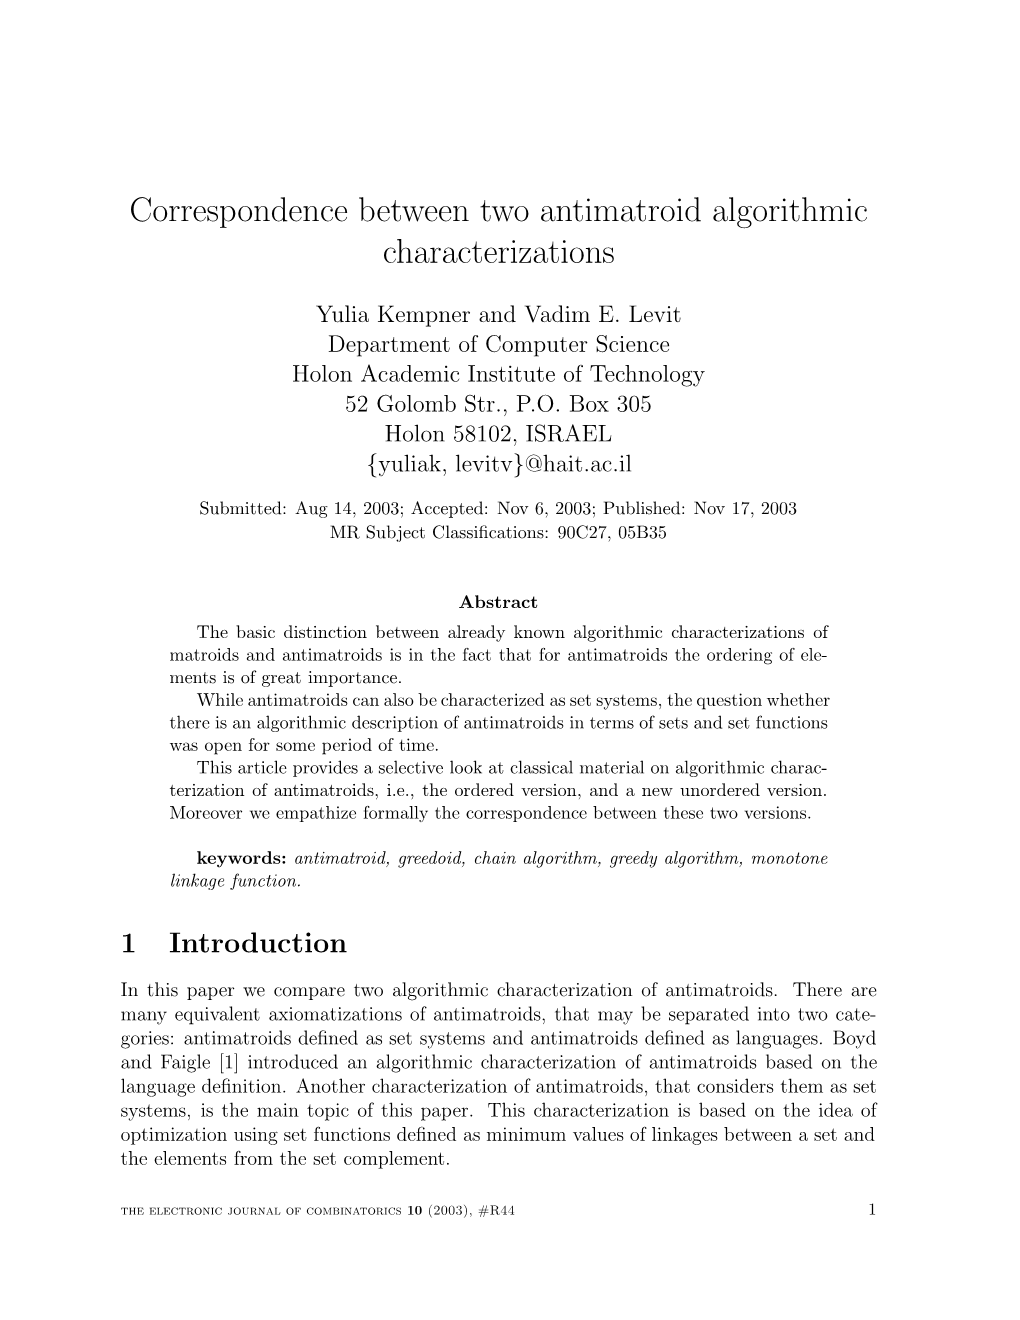 Correspondence Between Two Antimatroid Algorithmic Characterizations